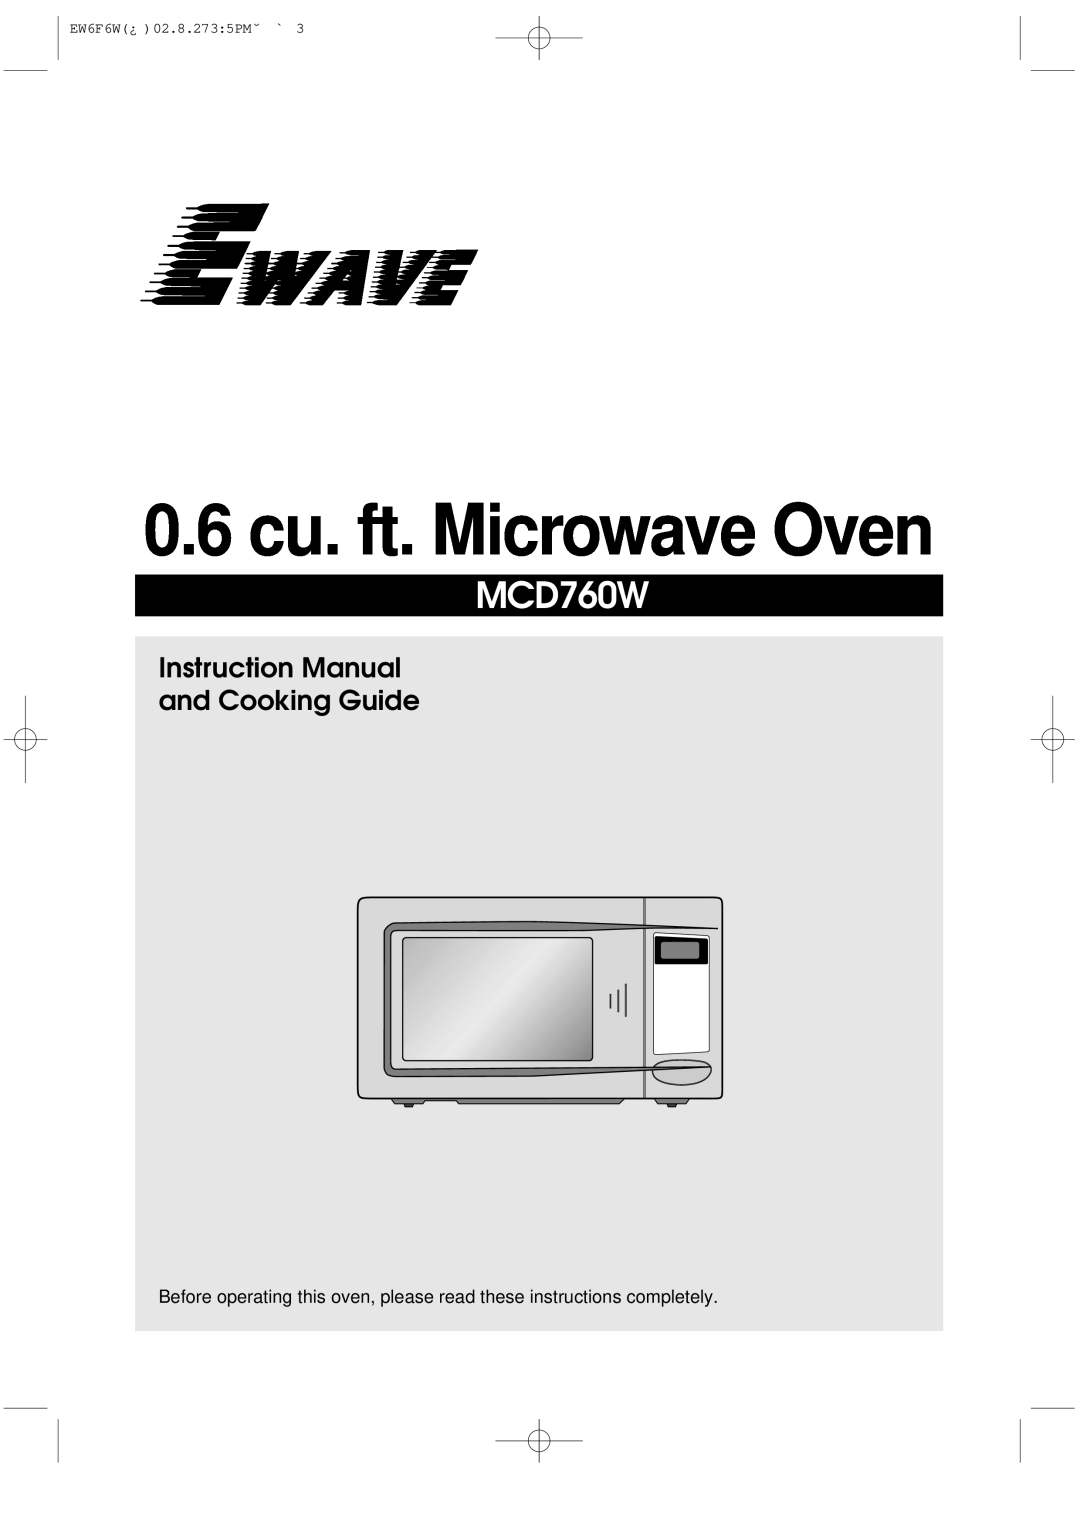 Magic Chef MCD760W instruction manual 0.6 cu. ft. Microwave Oven, EW6F6W¿ 02.8.273 5PM˘ ` 